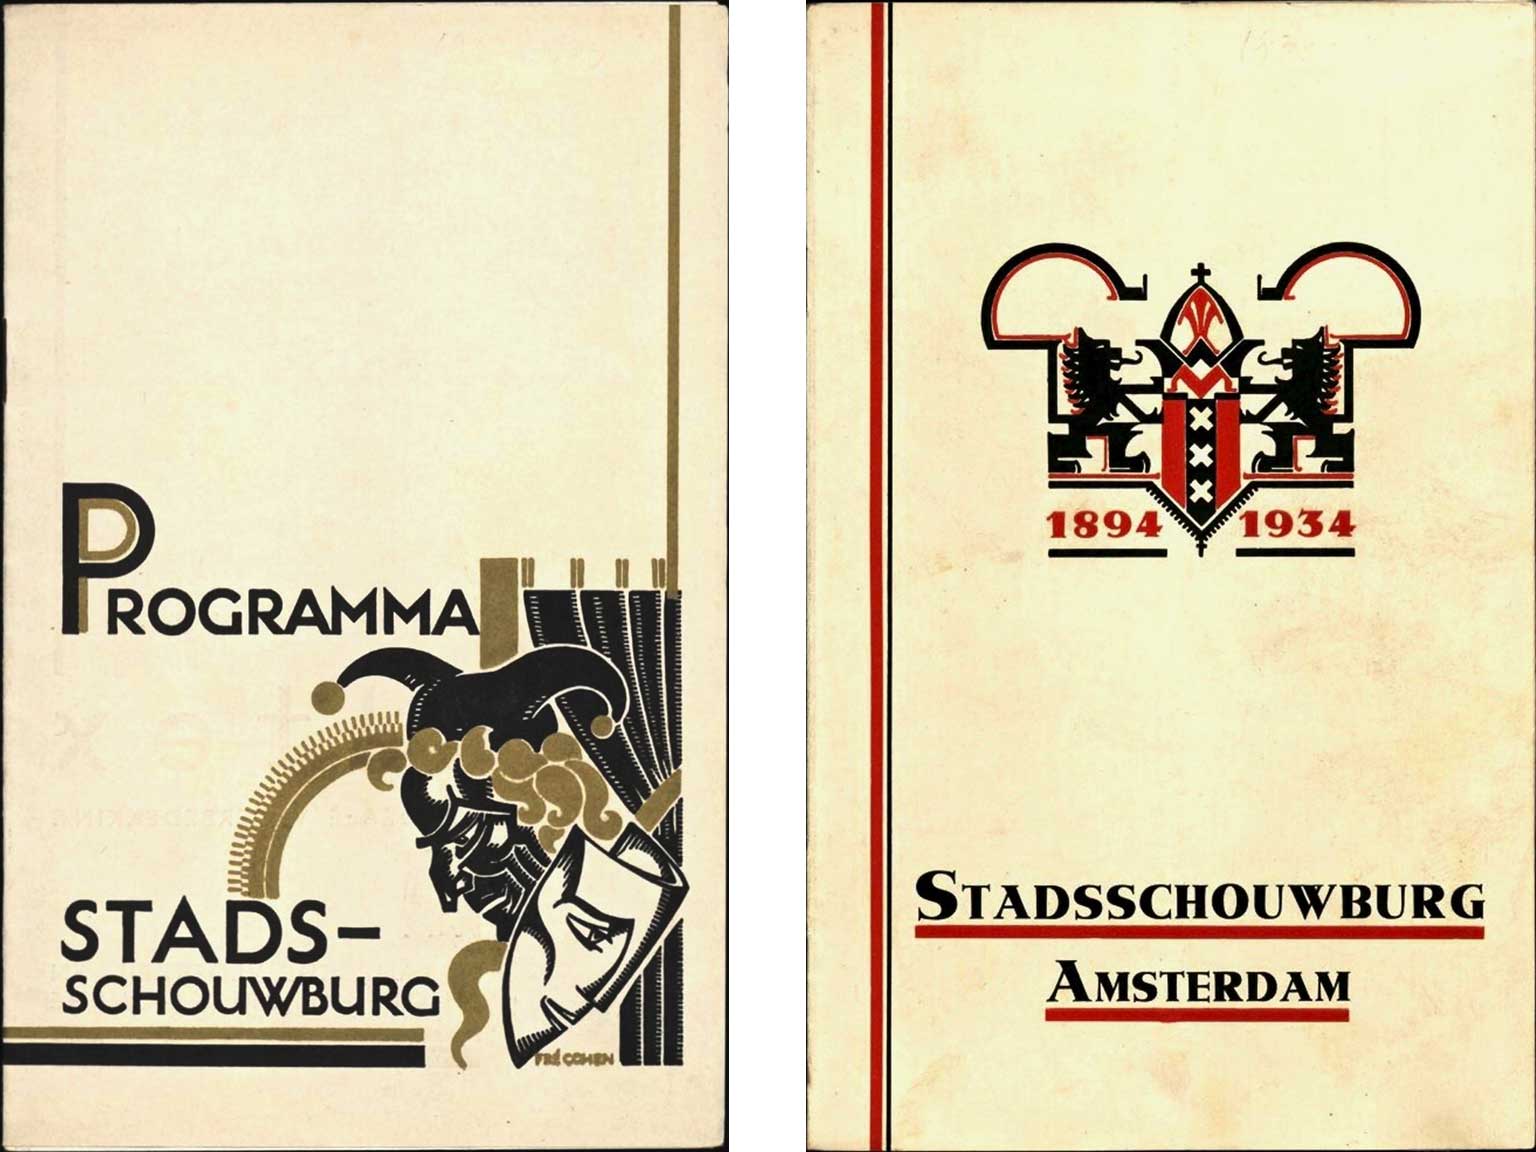 Old program booklets of Stadsschouwburg, Amsterdam